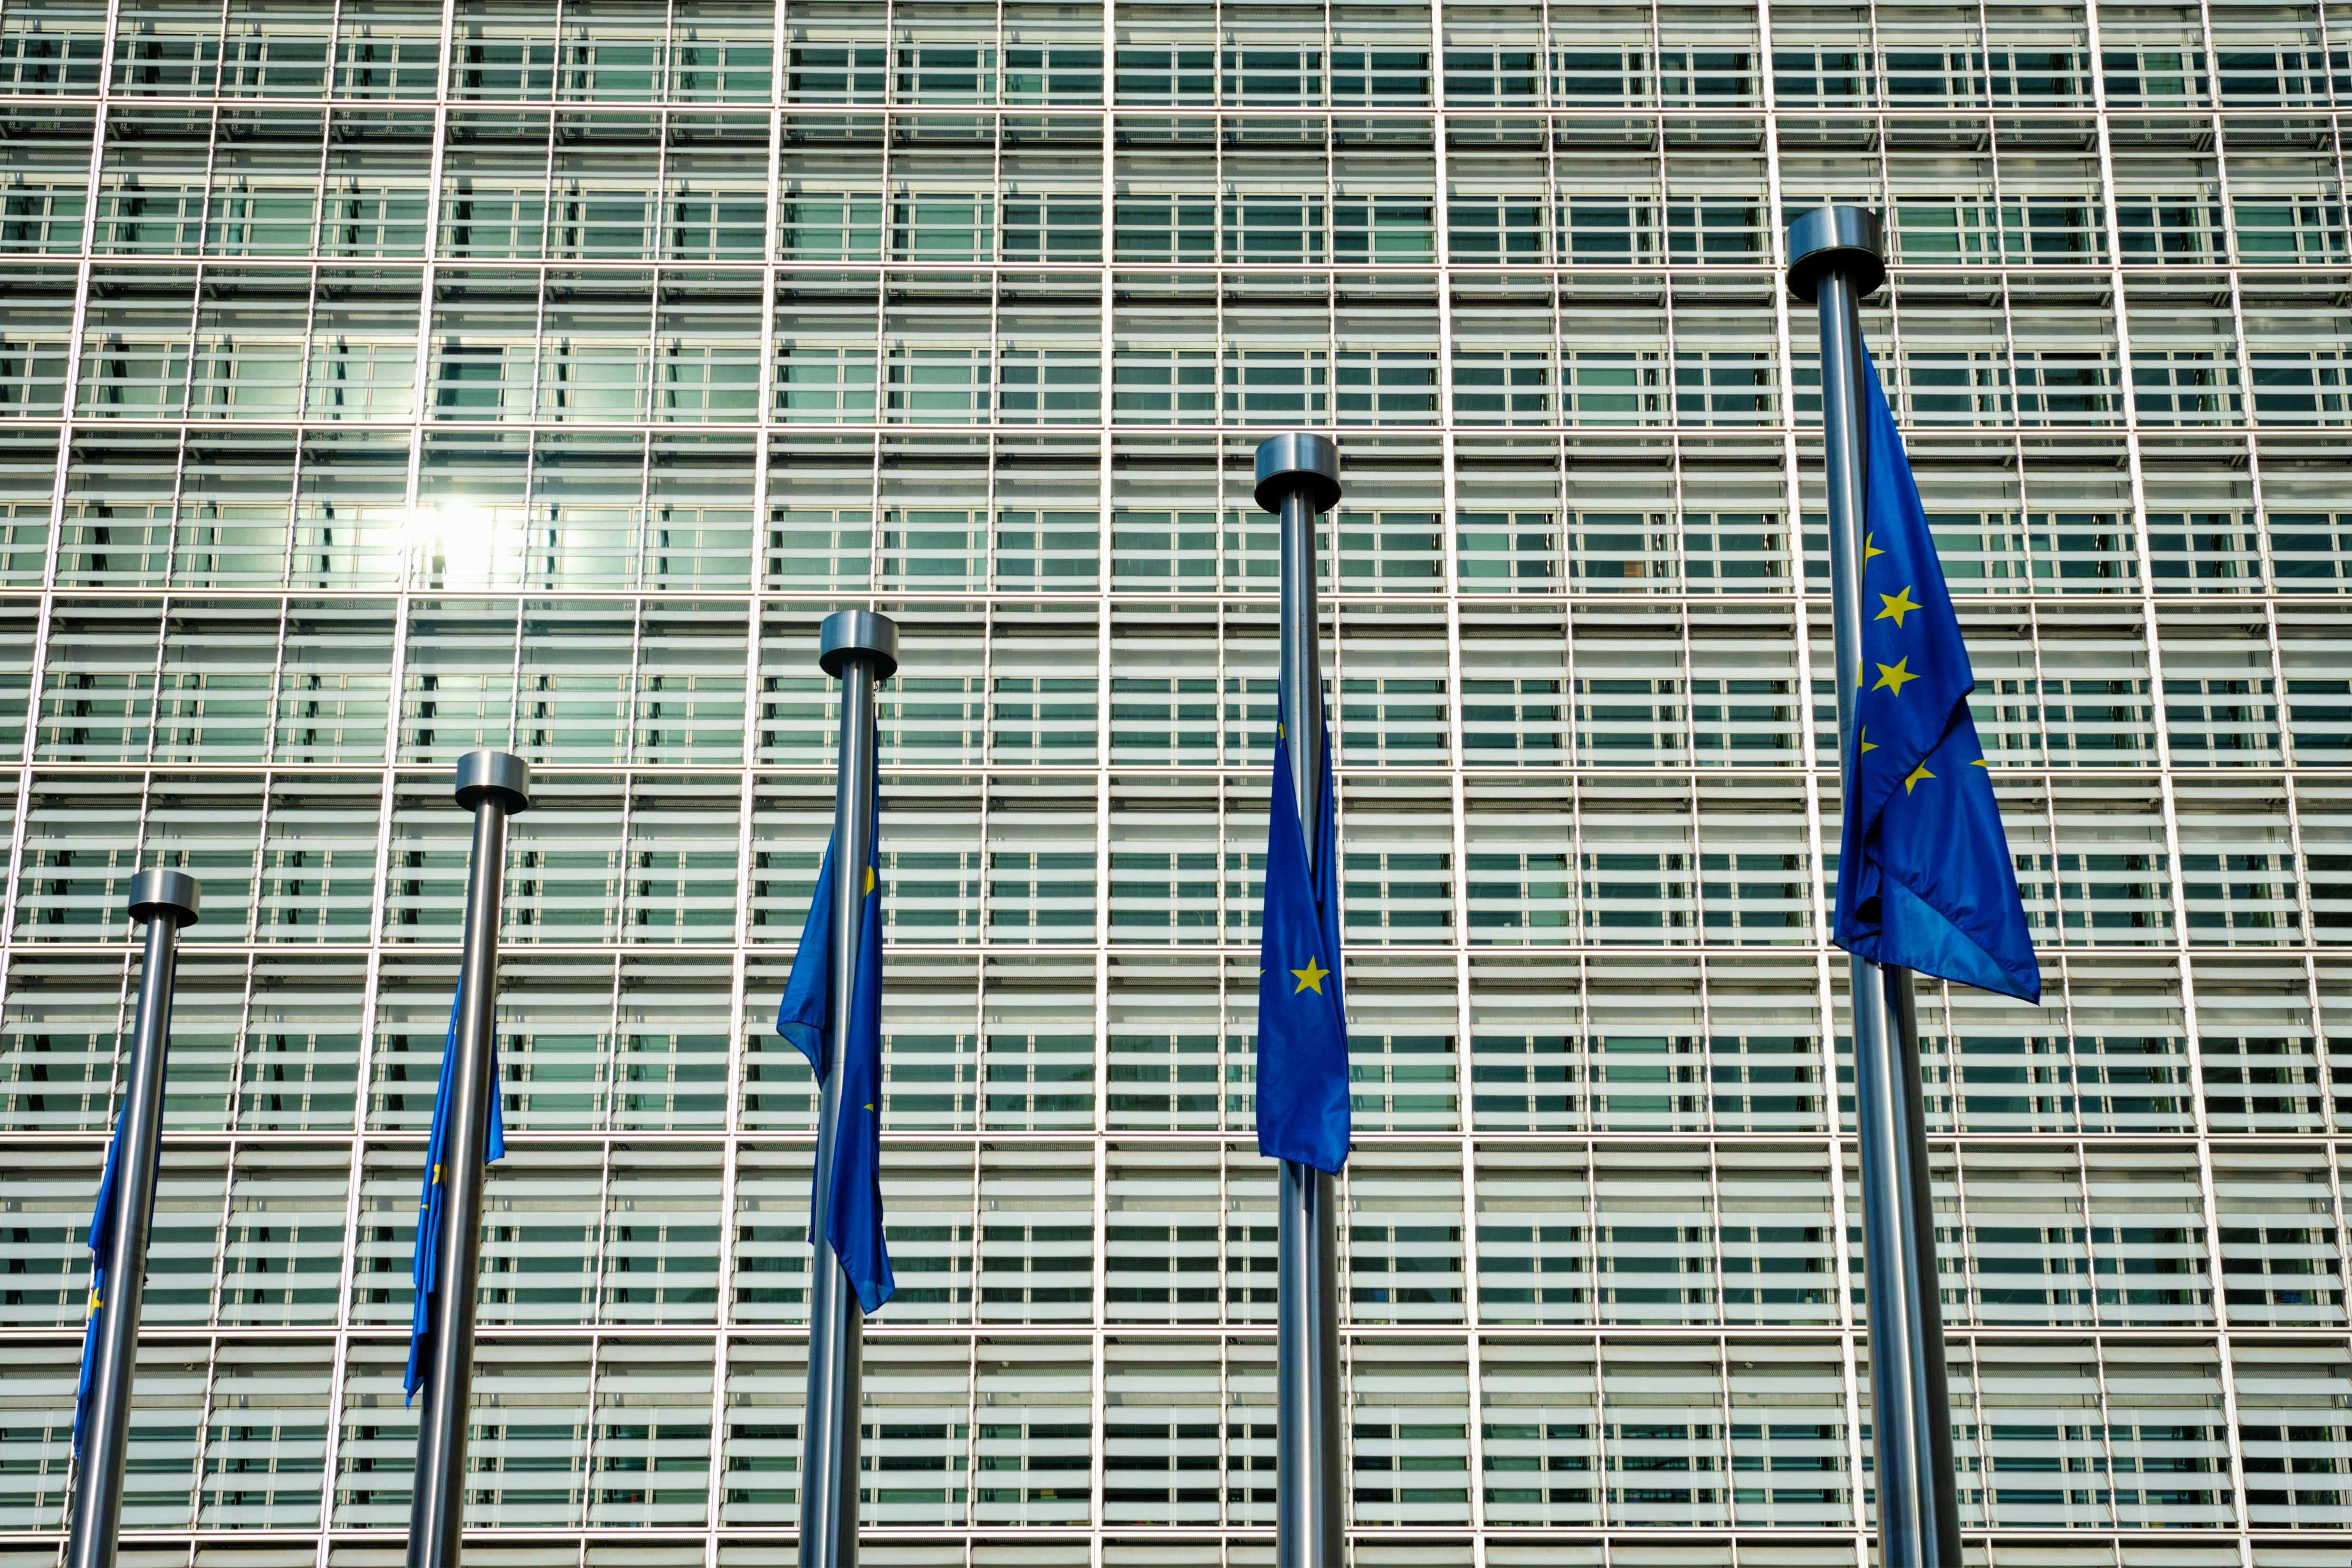 https://images.prismic.io/carbmee/e77e957e-7cf7-4e9a-ba3f-9f9a1258cbcf_eu-european-union-flags-in-front-of-european-comis-2021-08-29-01-49-11-utc-min.jpg?auto=compress,format